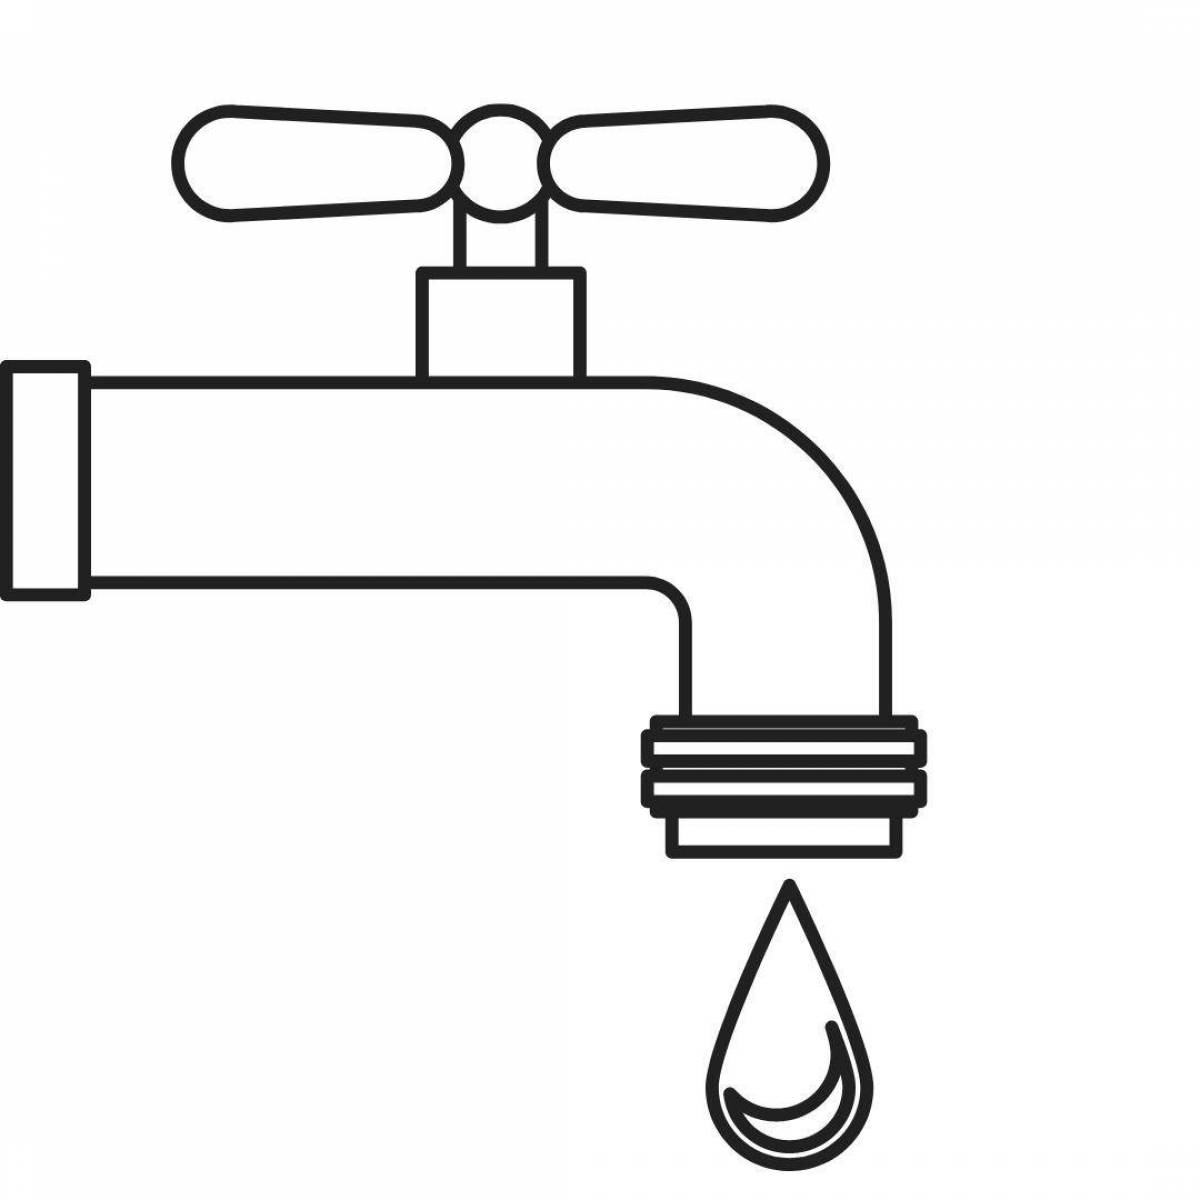 Water faucet #19